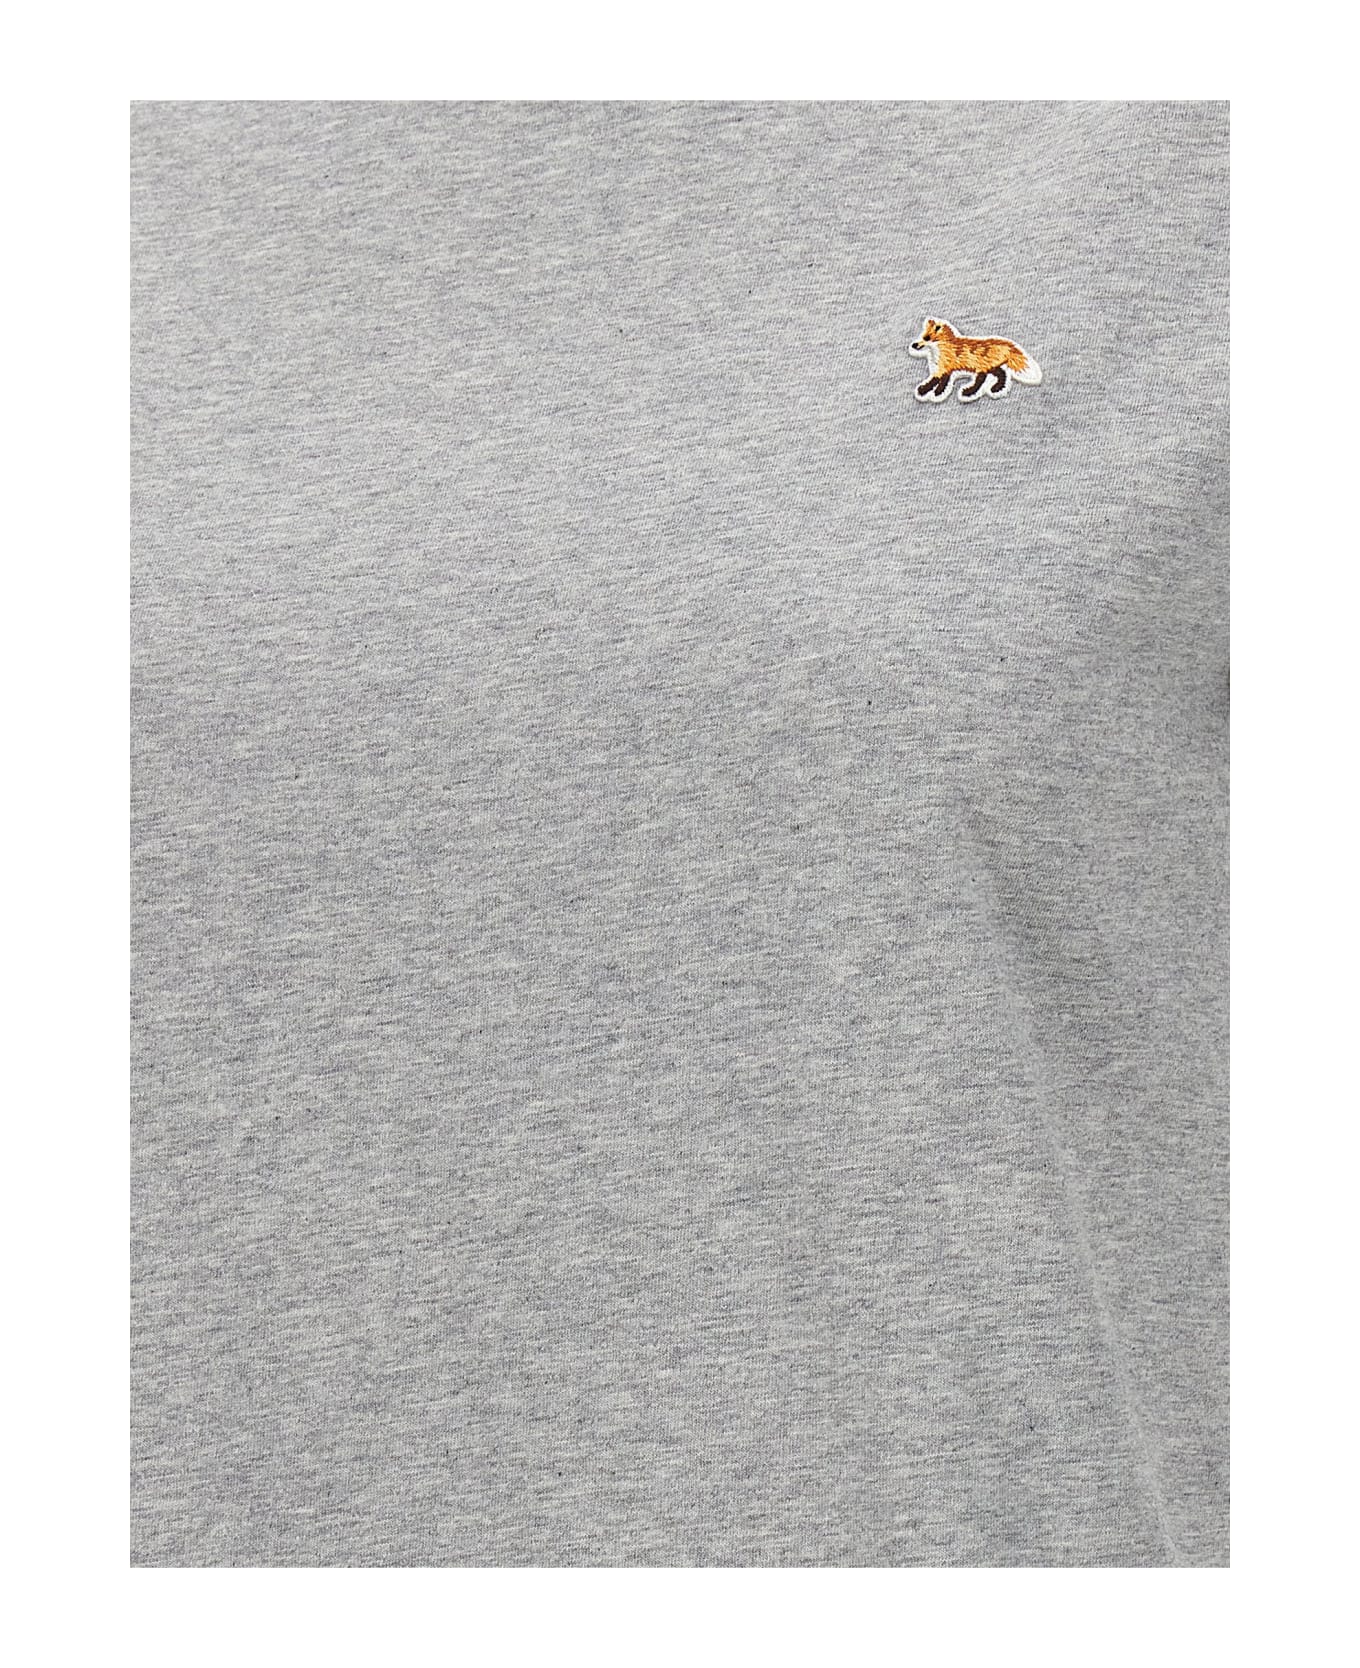 Maison Kitsuné 'baby Fox' T-shirt - Gray